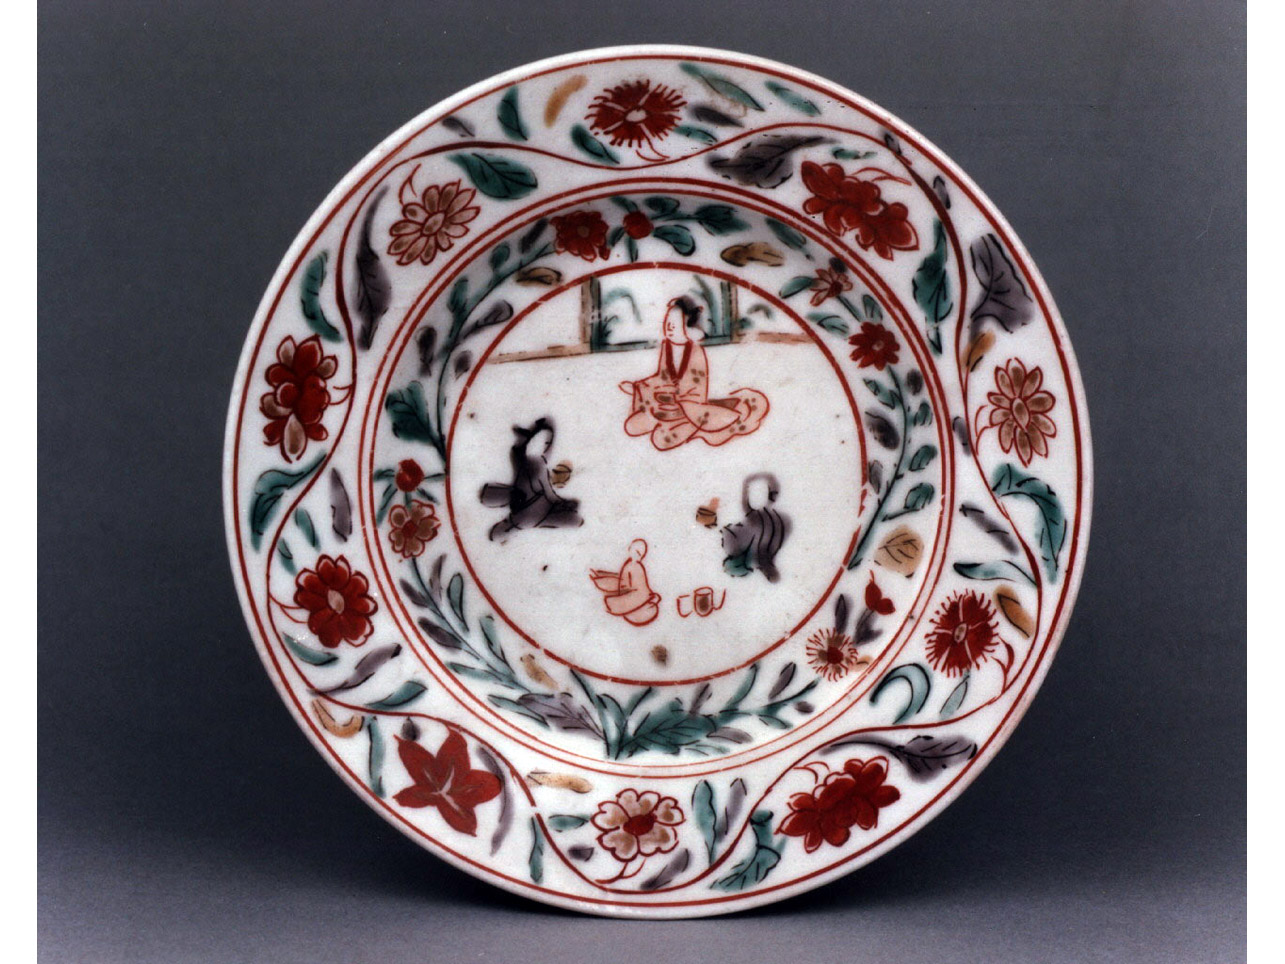 motivi decorativi vegetali e animali (piattino) - manifattura di Arita (secc. XVII/ XVIII)